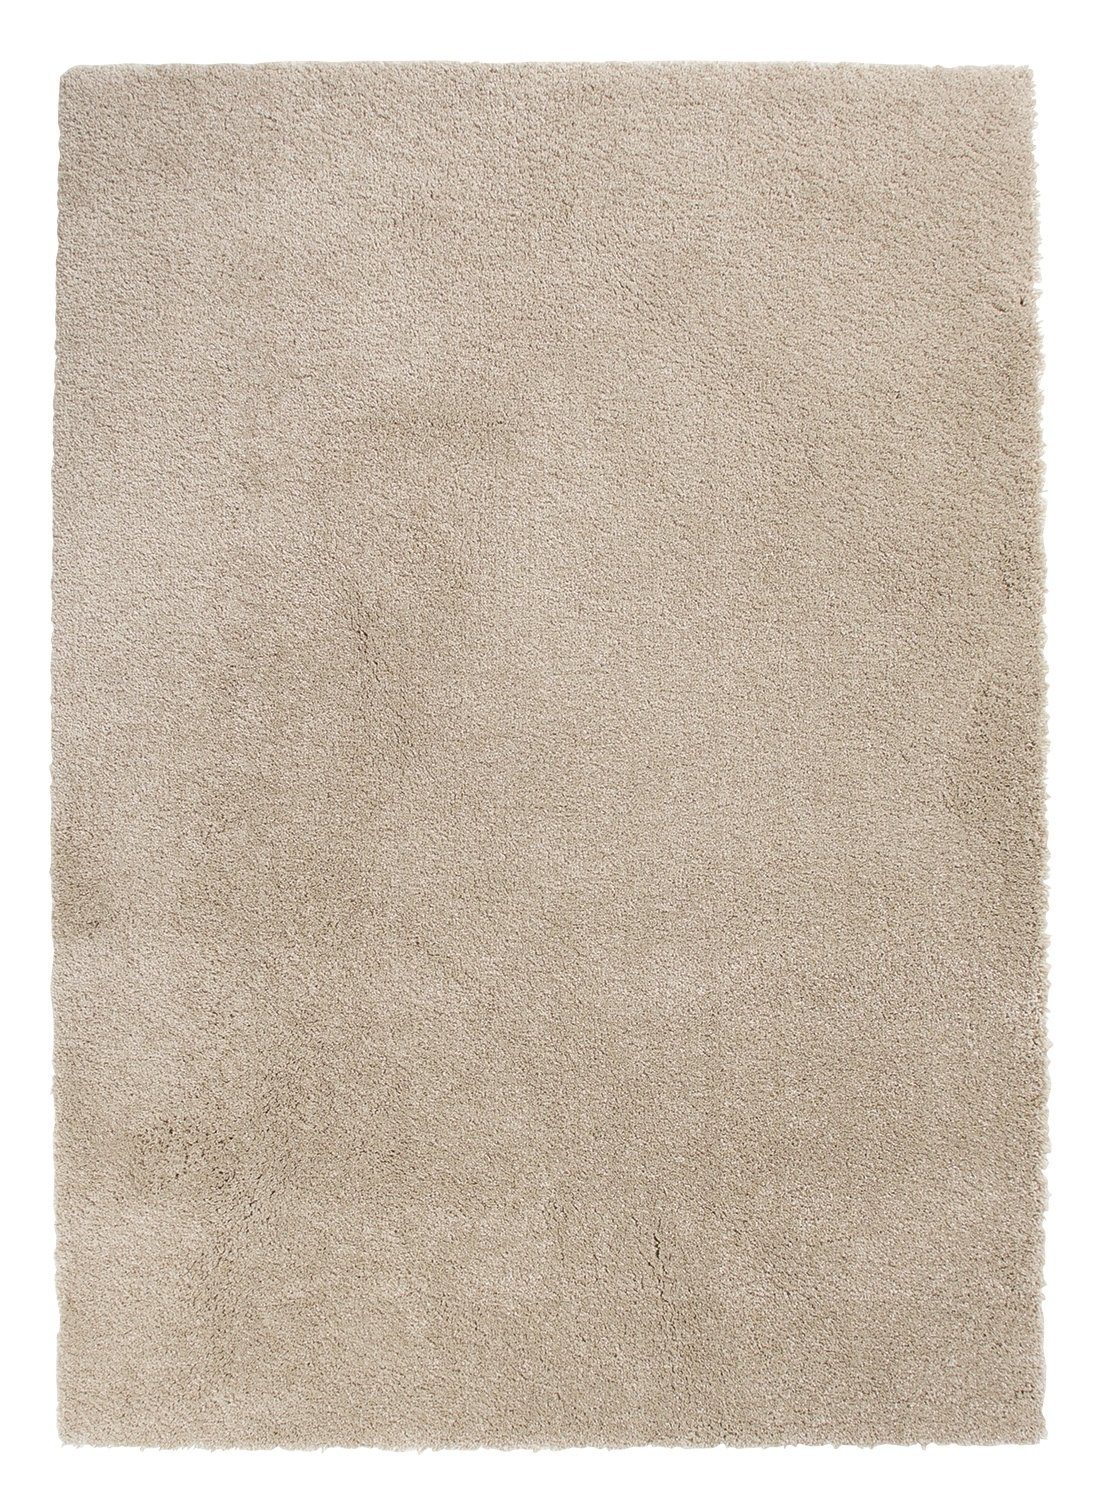 Teppich DELIGHT COSY, Polypropylen, Beige, 80 x 150 cm, Balta Rugs, rechteckig, Höhe: 22 mm